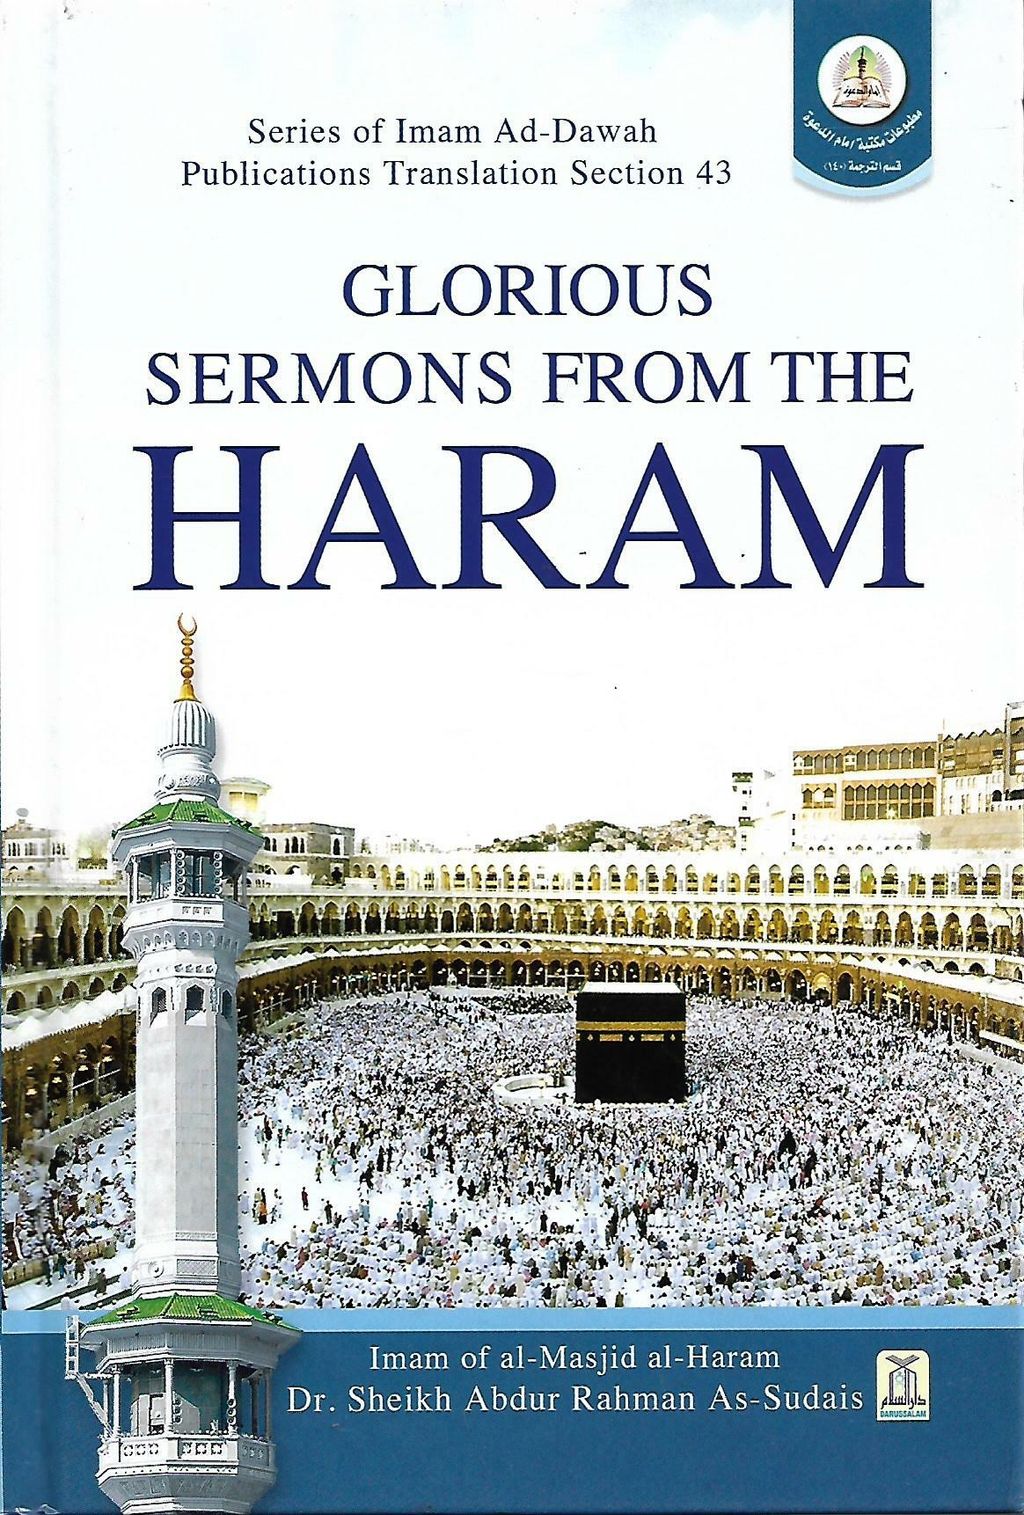 sermons from haram_0001.jpg